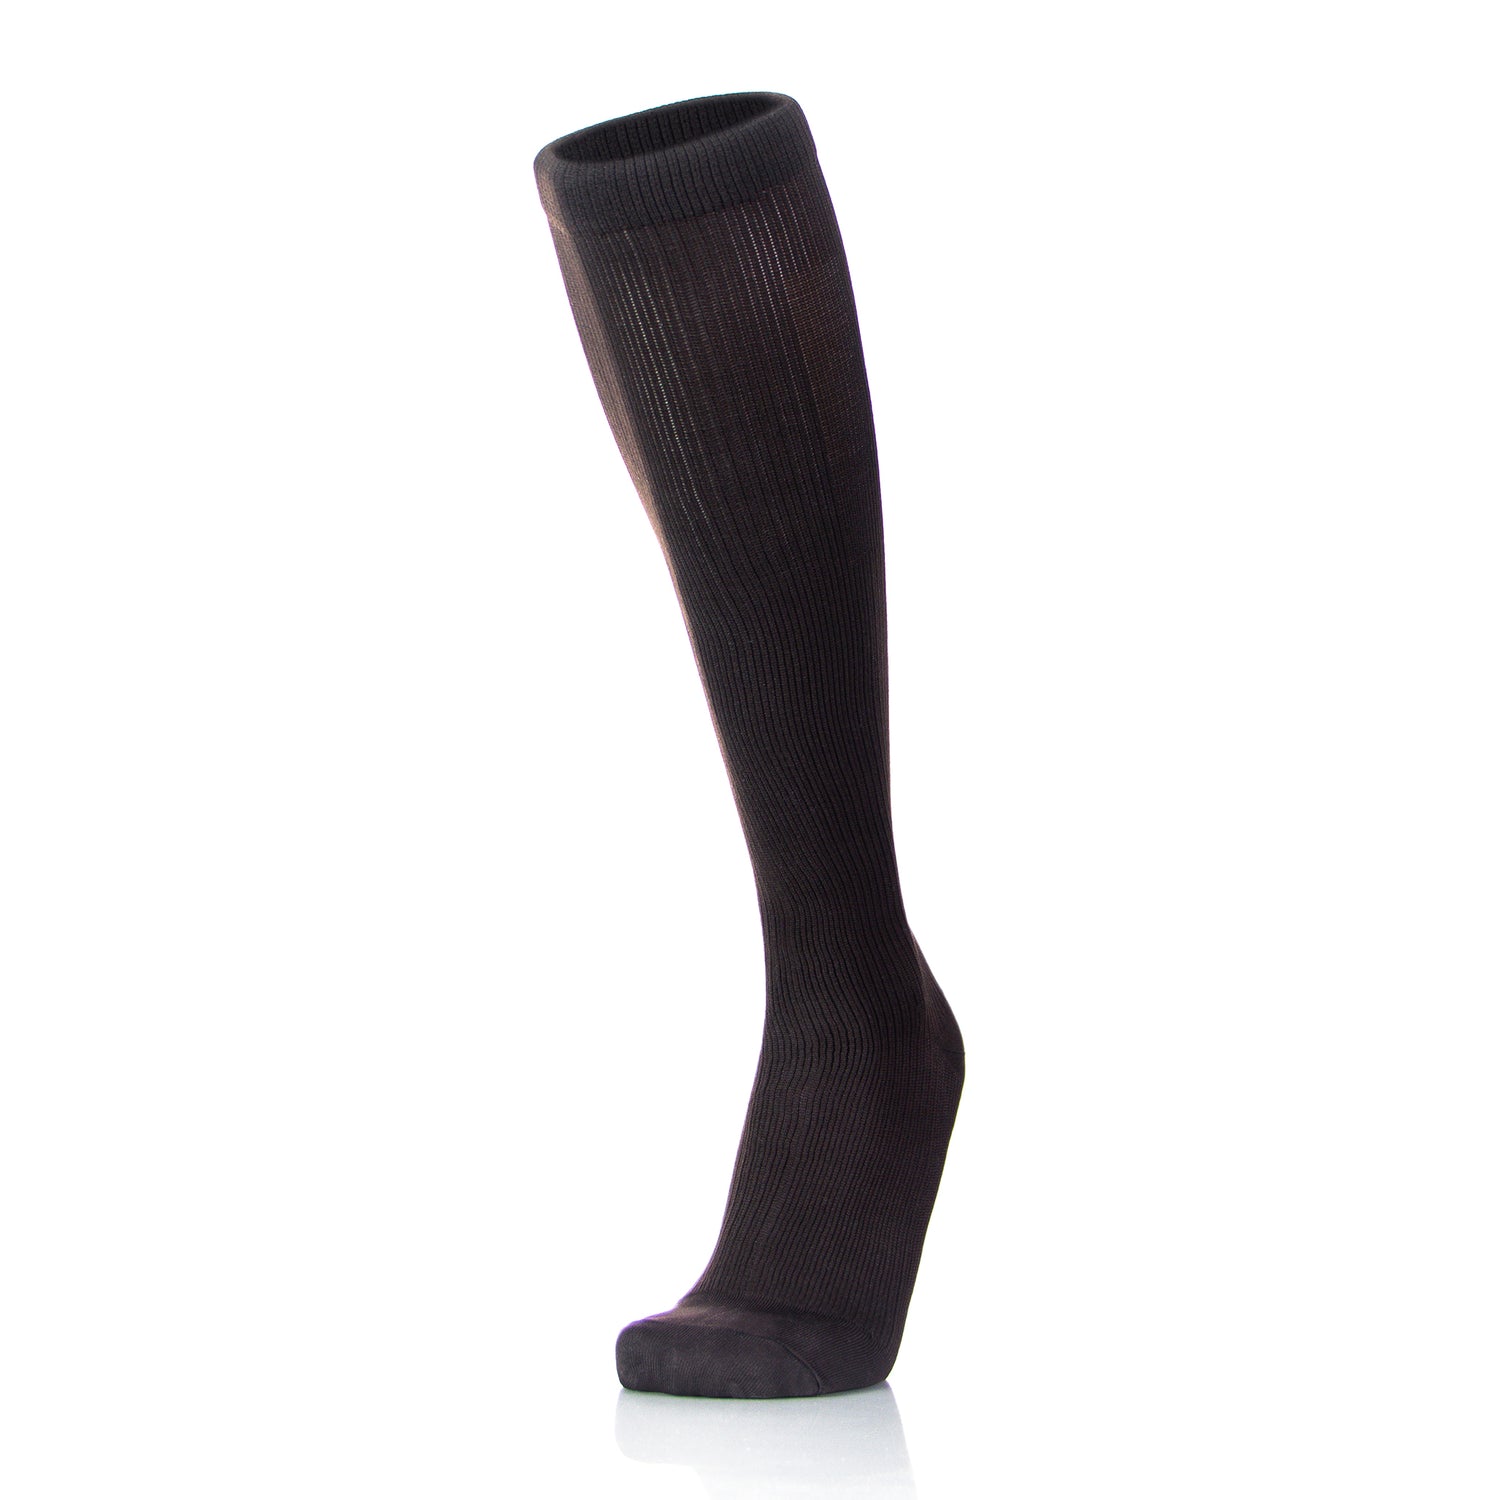 Graduated Compression Thick Yarn Beige Socks 20-30mmHg